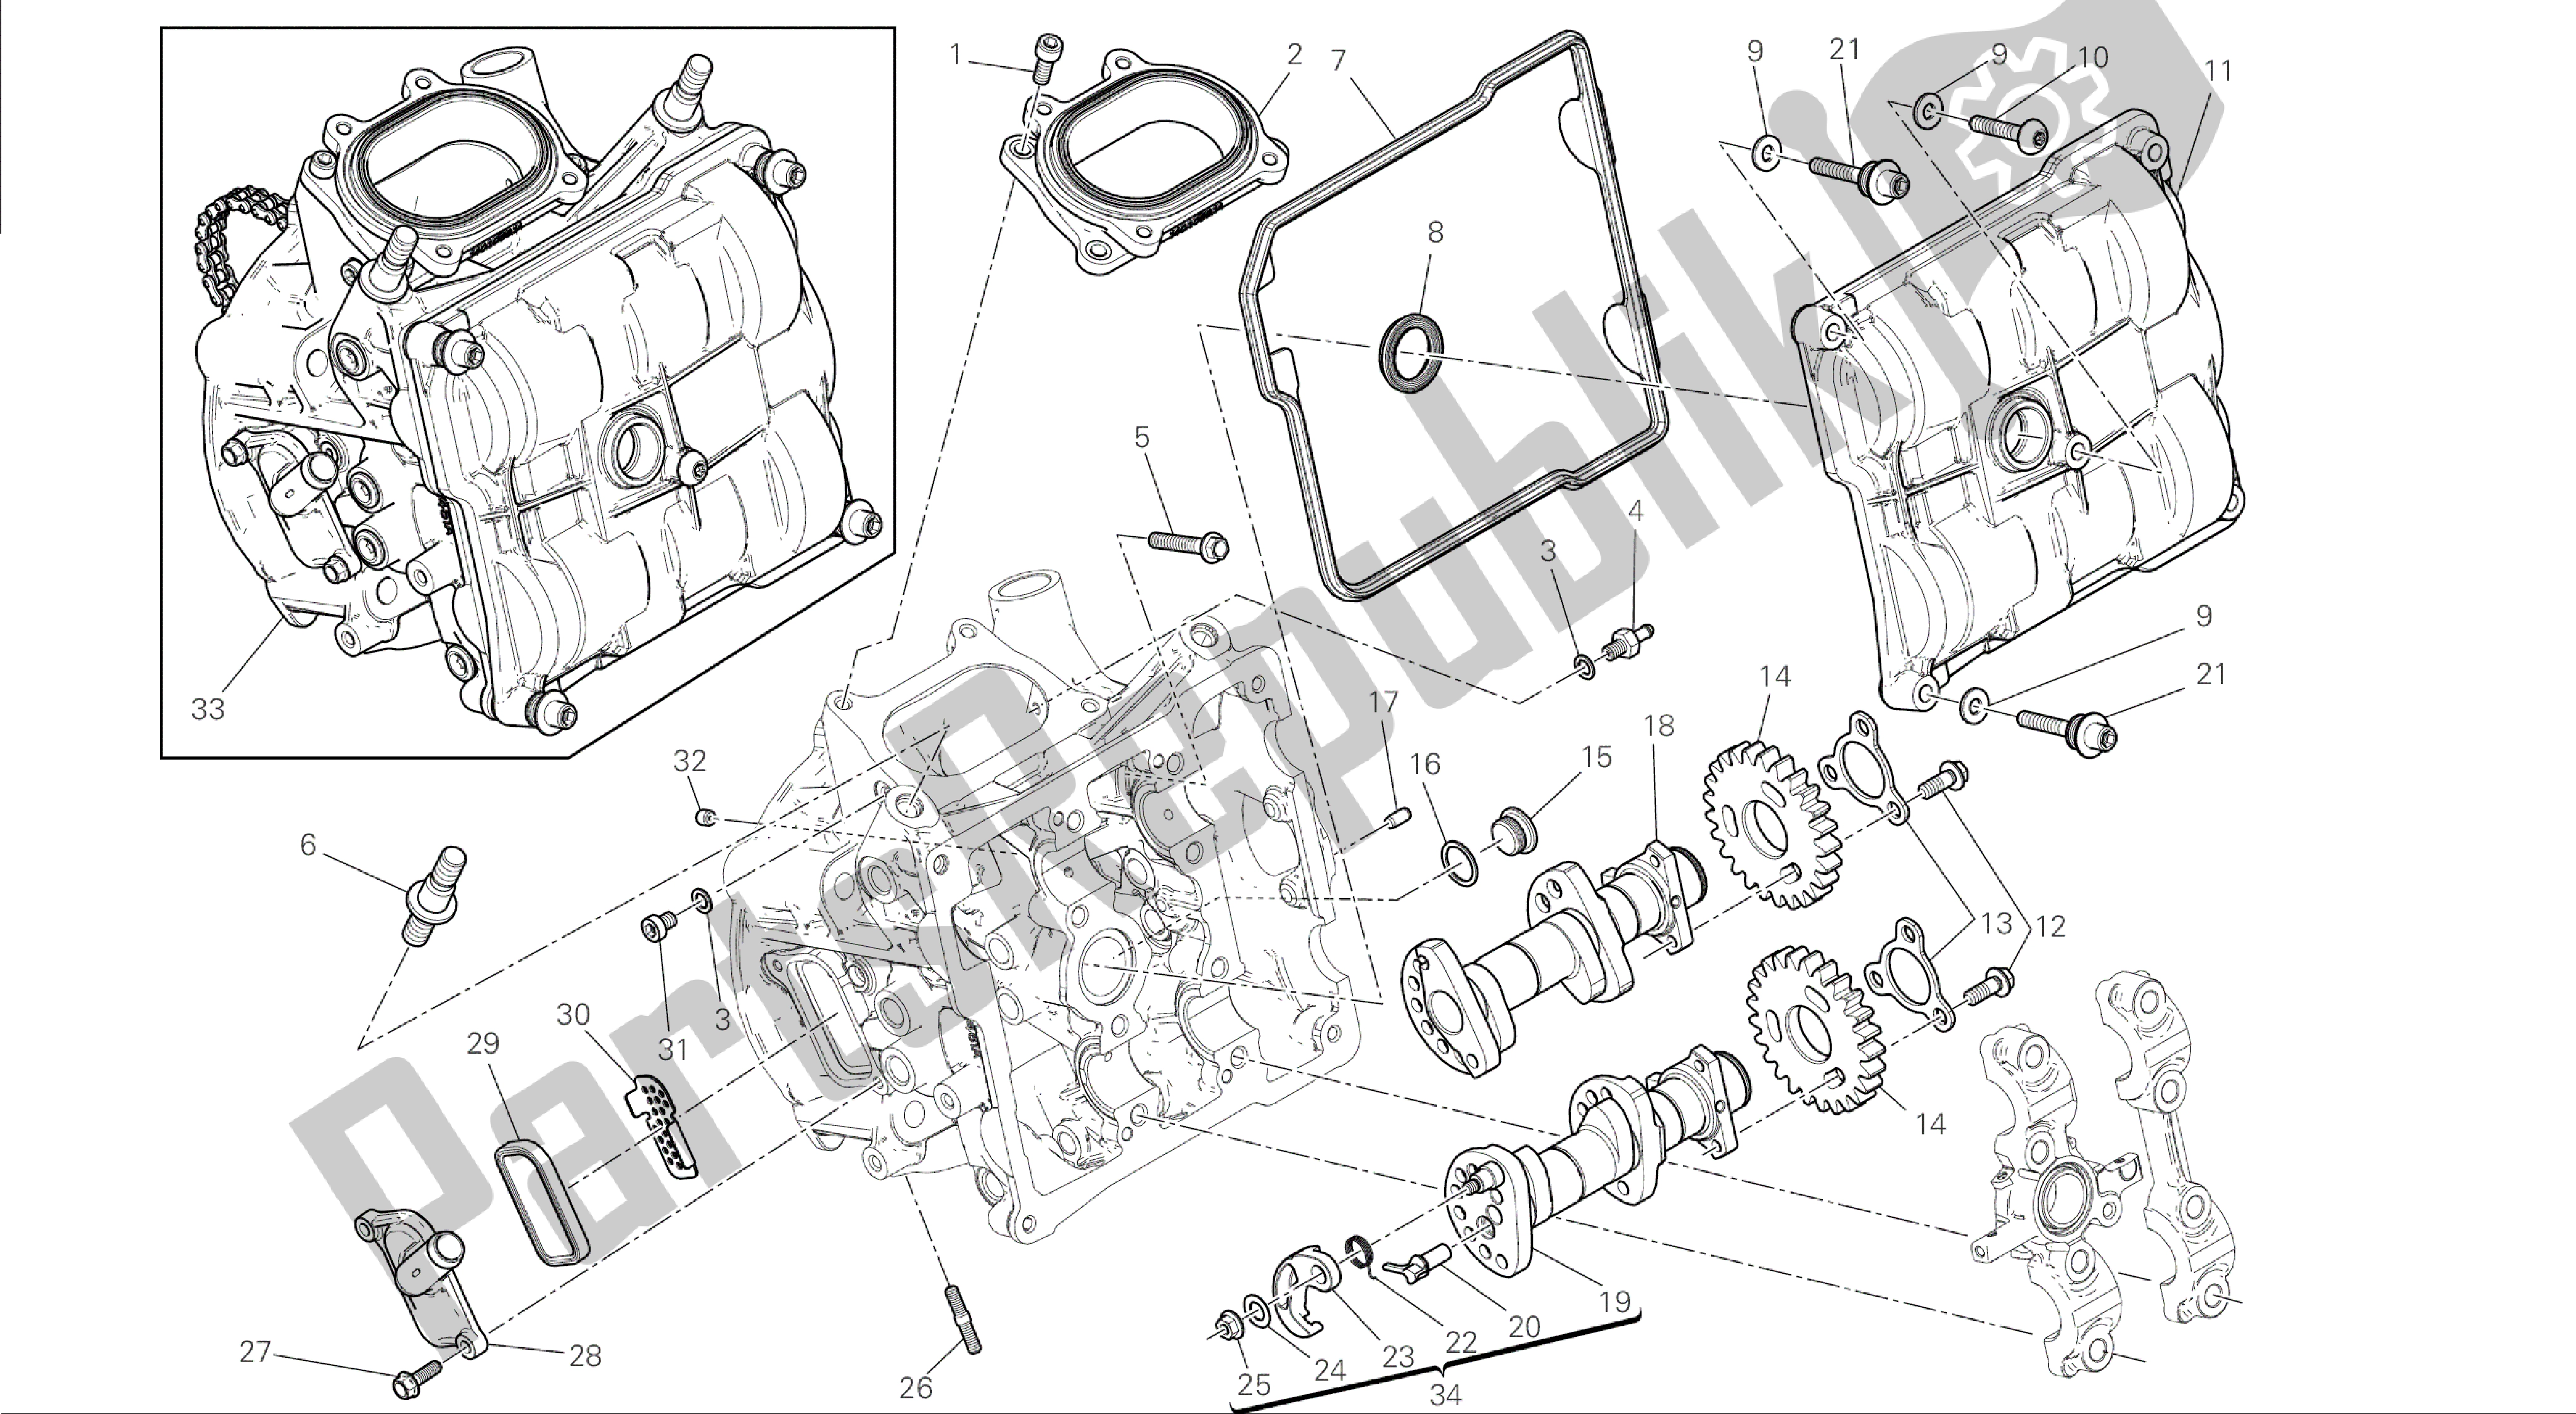 Alle onderdelen voor de Tekening 013 - Testa Orizzontale - Distribuzione [mod: 1199abs; Xst: Aus, Bra, Eur, Fra, Jap] Groepsmotor van de Ducati Panigale ABS 1199 2014